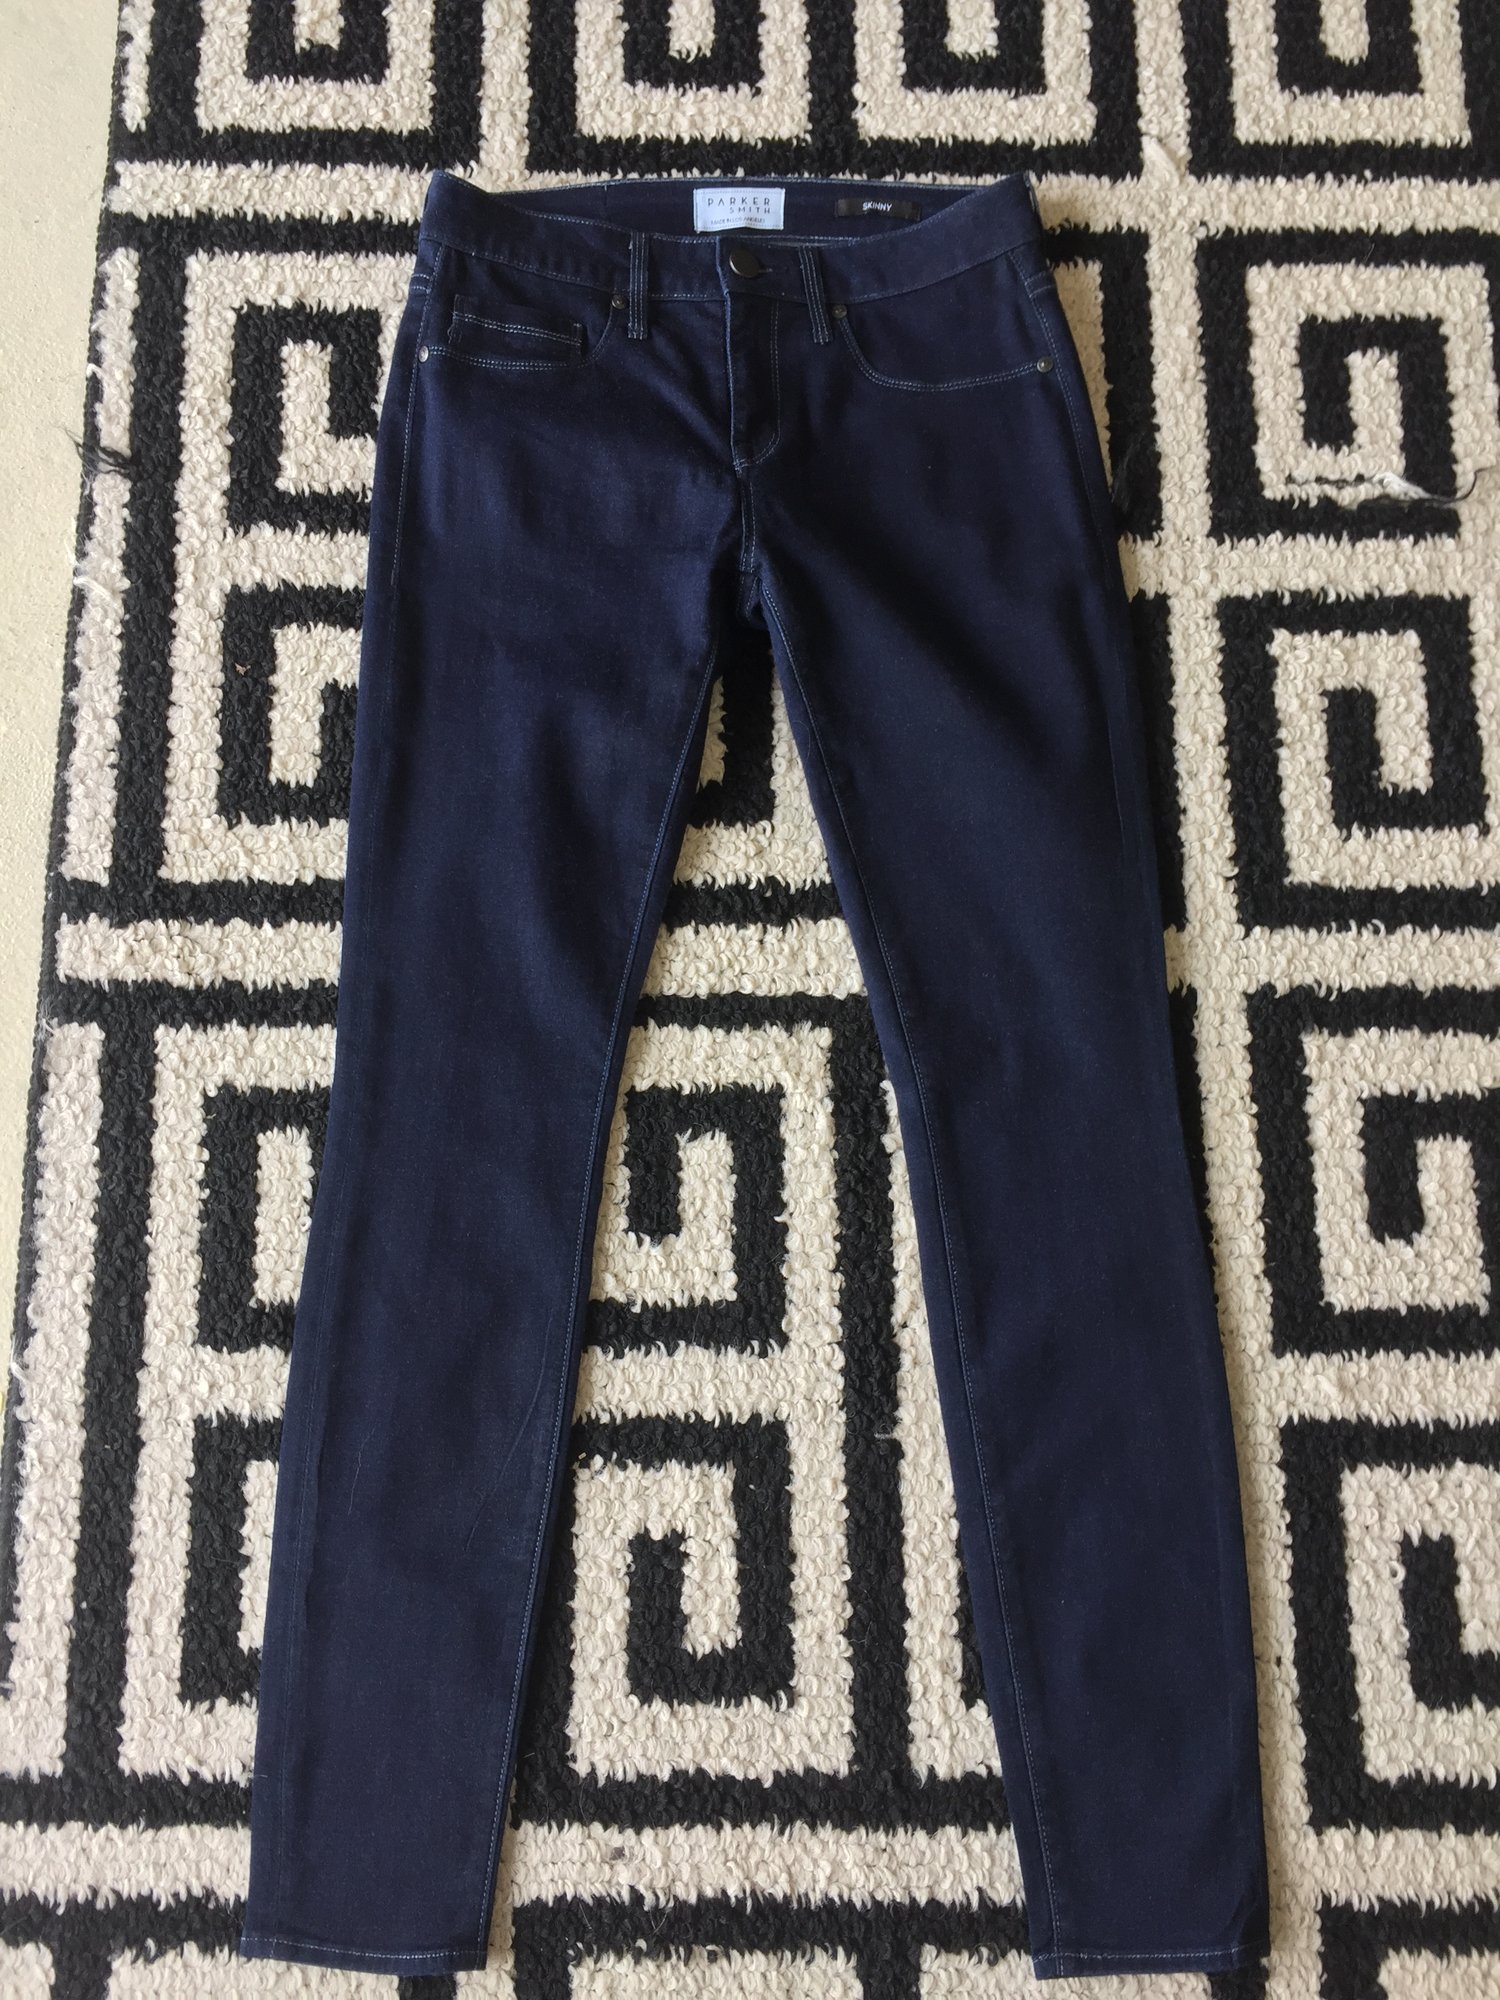 Park Smith Jeans. Size 26 (2). Dark wash, skinny cut. Like new! Retail approx: $148